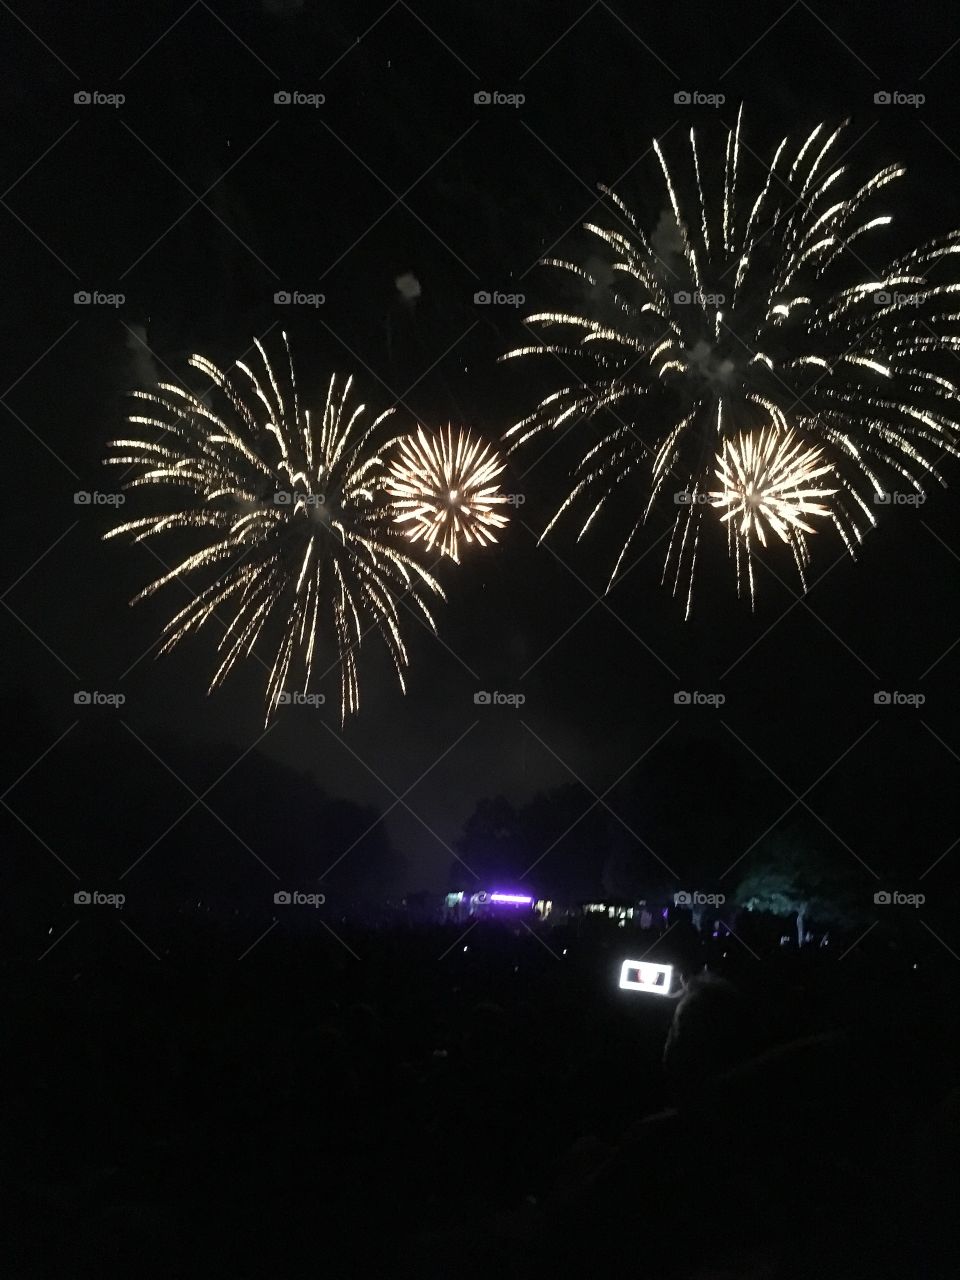 Fireworks light the sky 